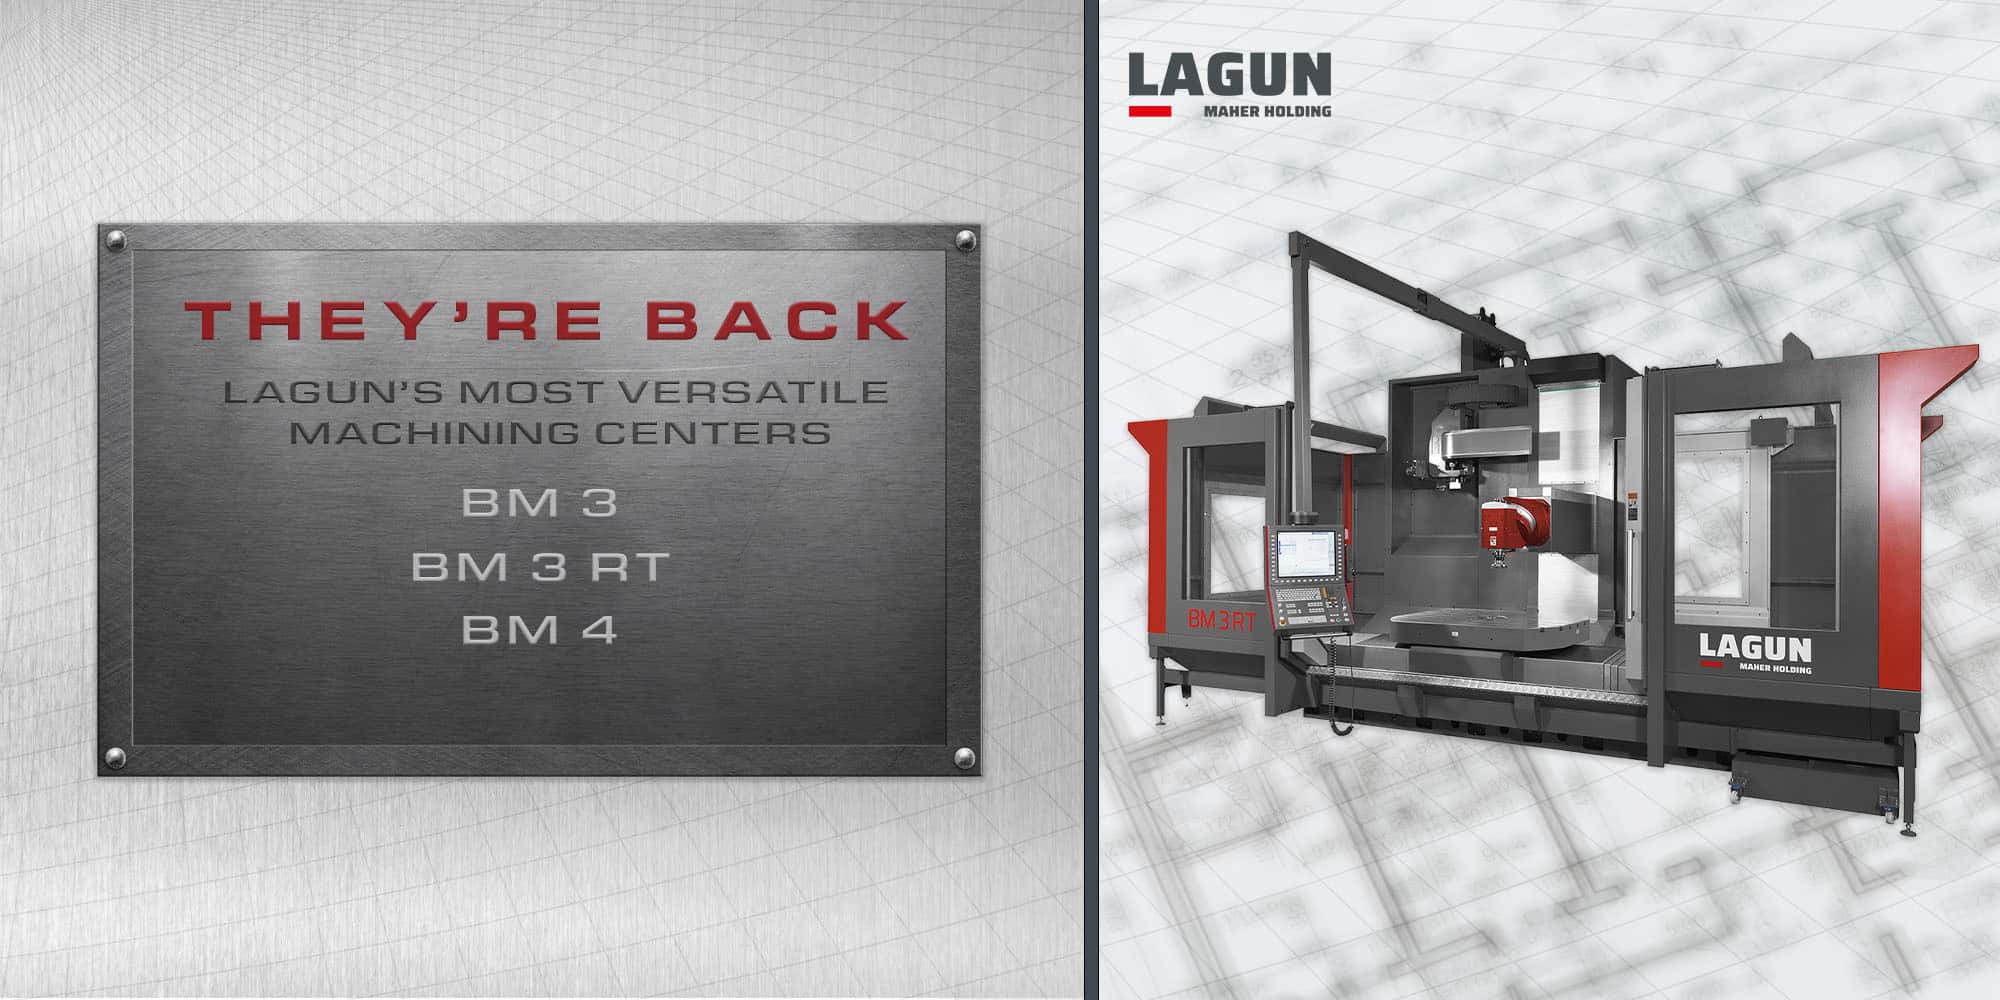 They're Back. Lagun's most versatile machining centers: BM 3, BM 3 RT, BM 4